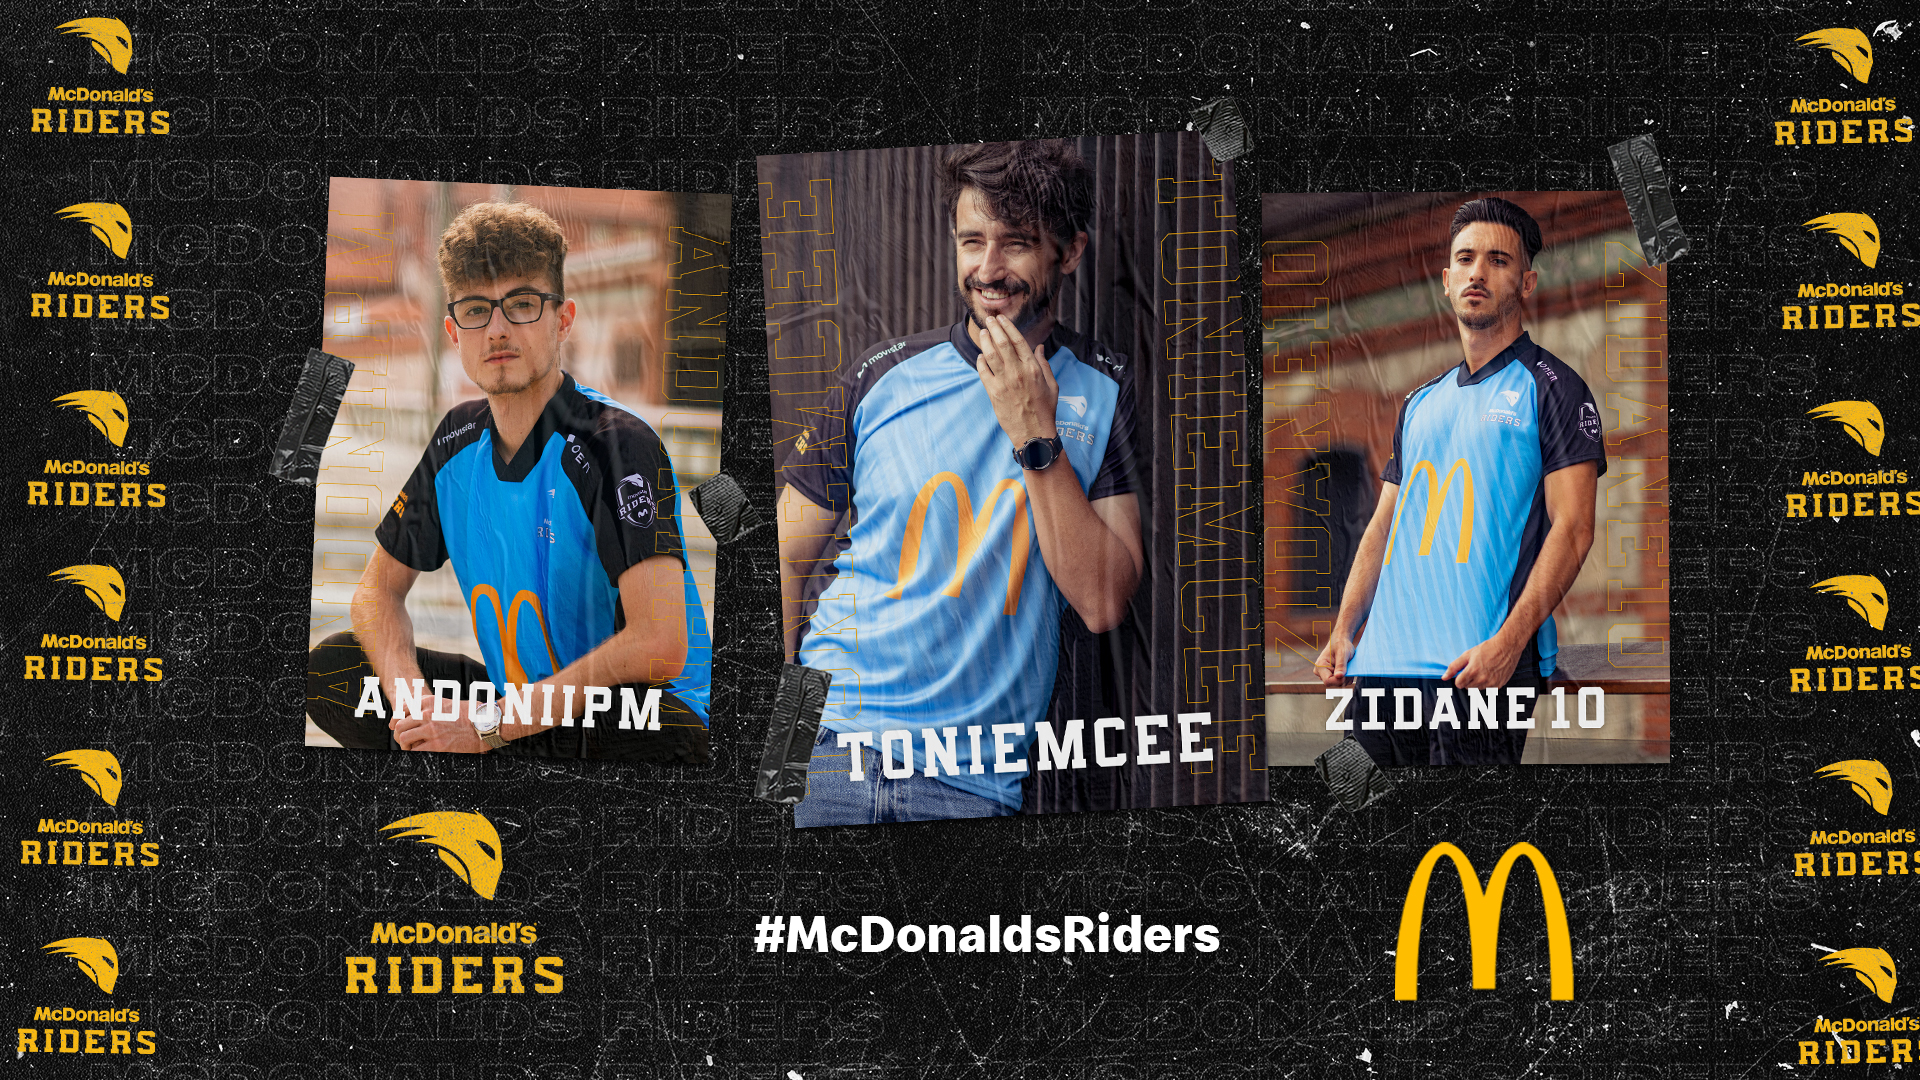 McDonald’s patrocina al equipo de FIFA McDonald’s Riders